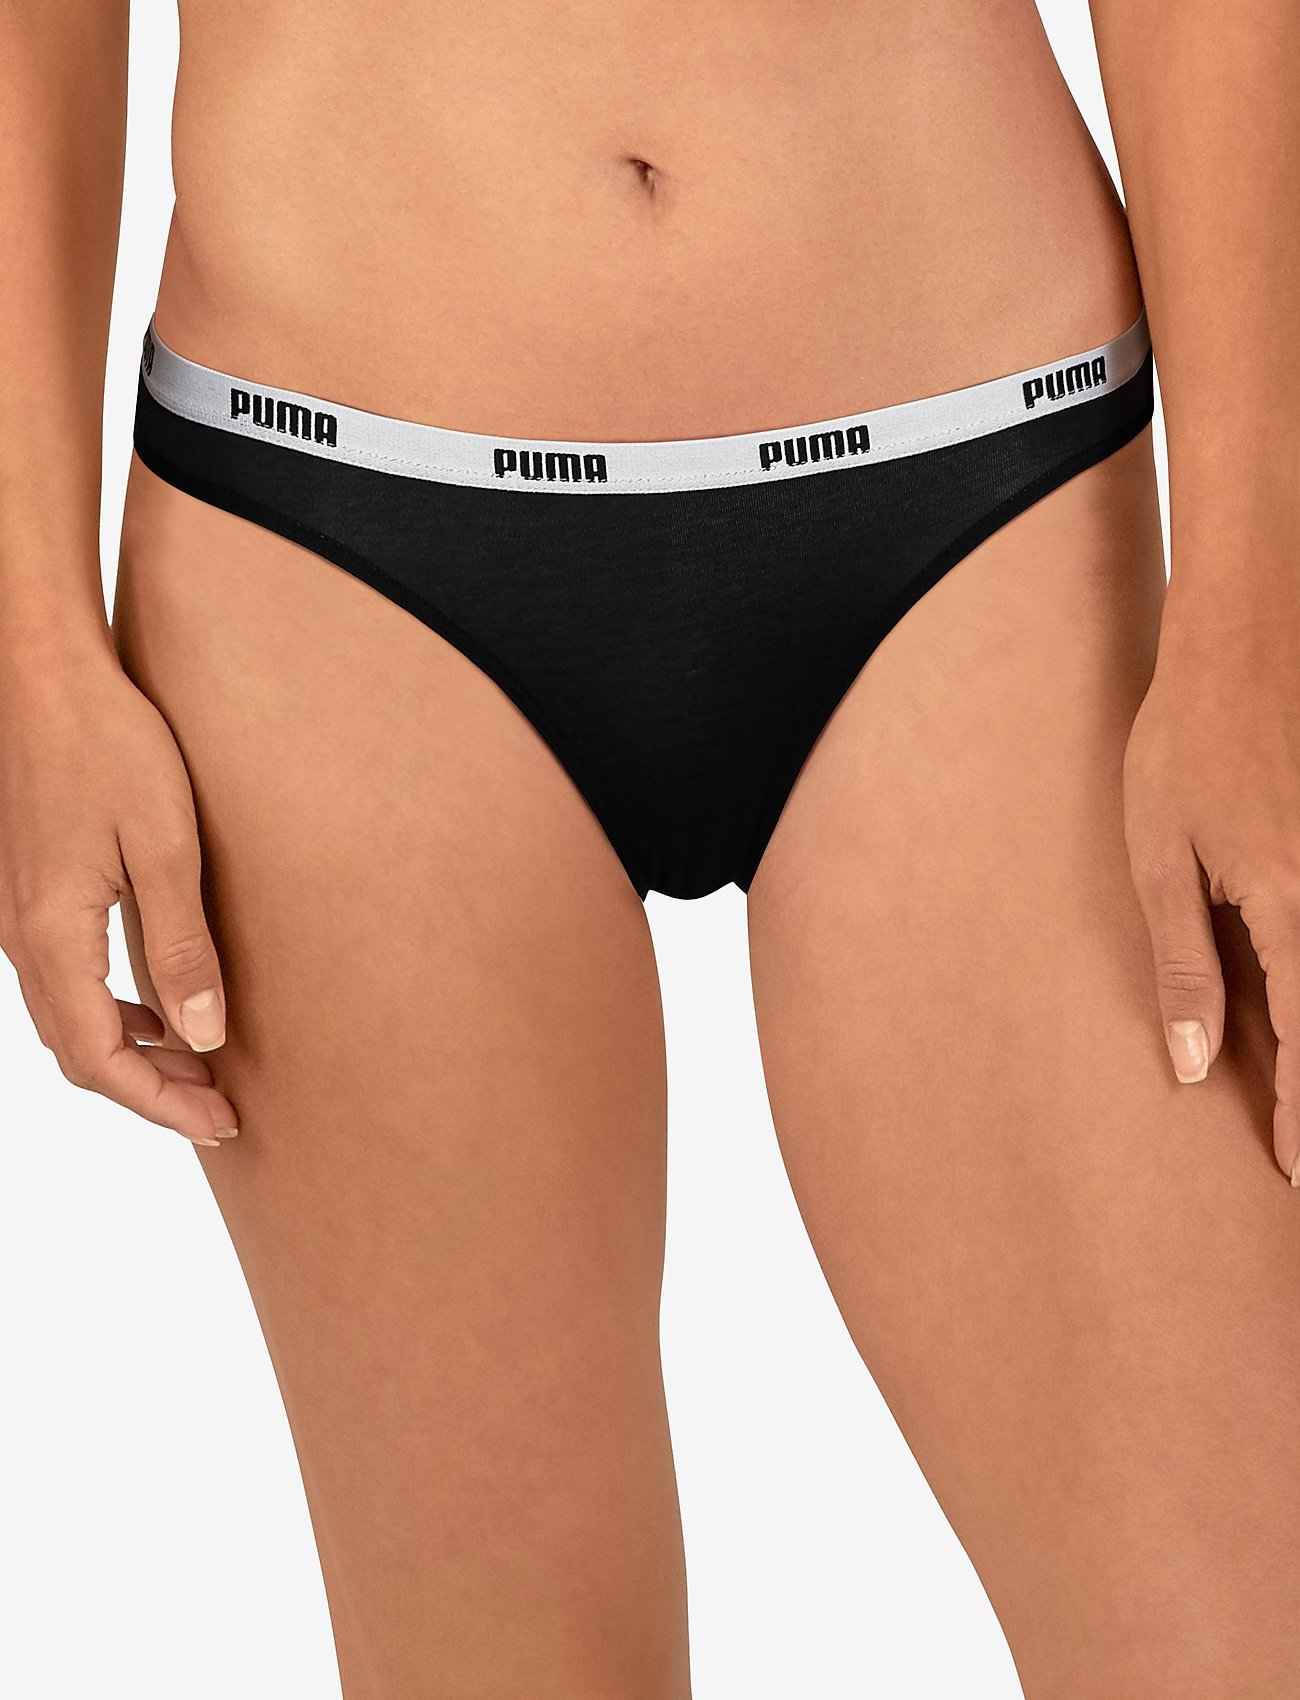 puma bikini underwear